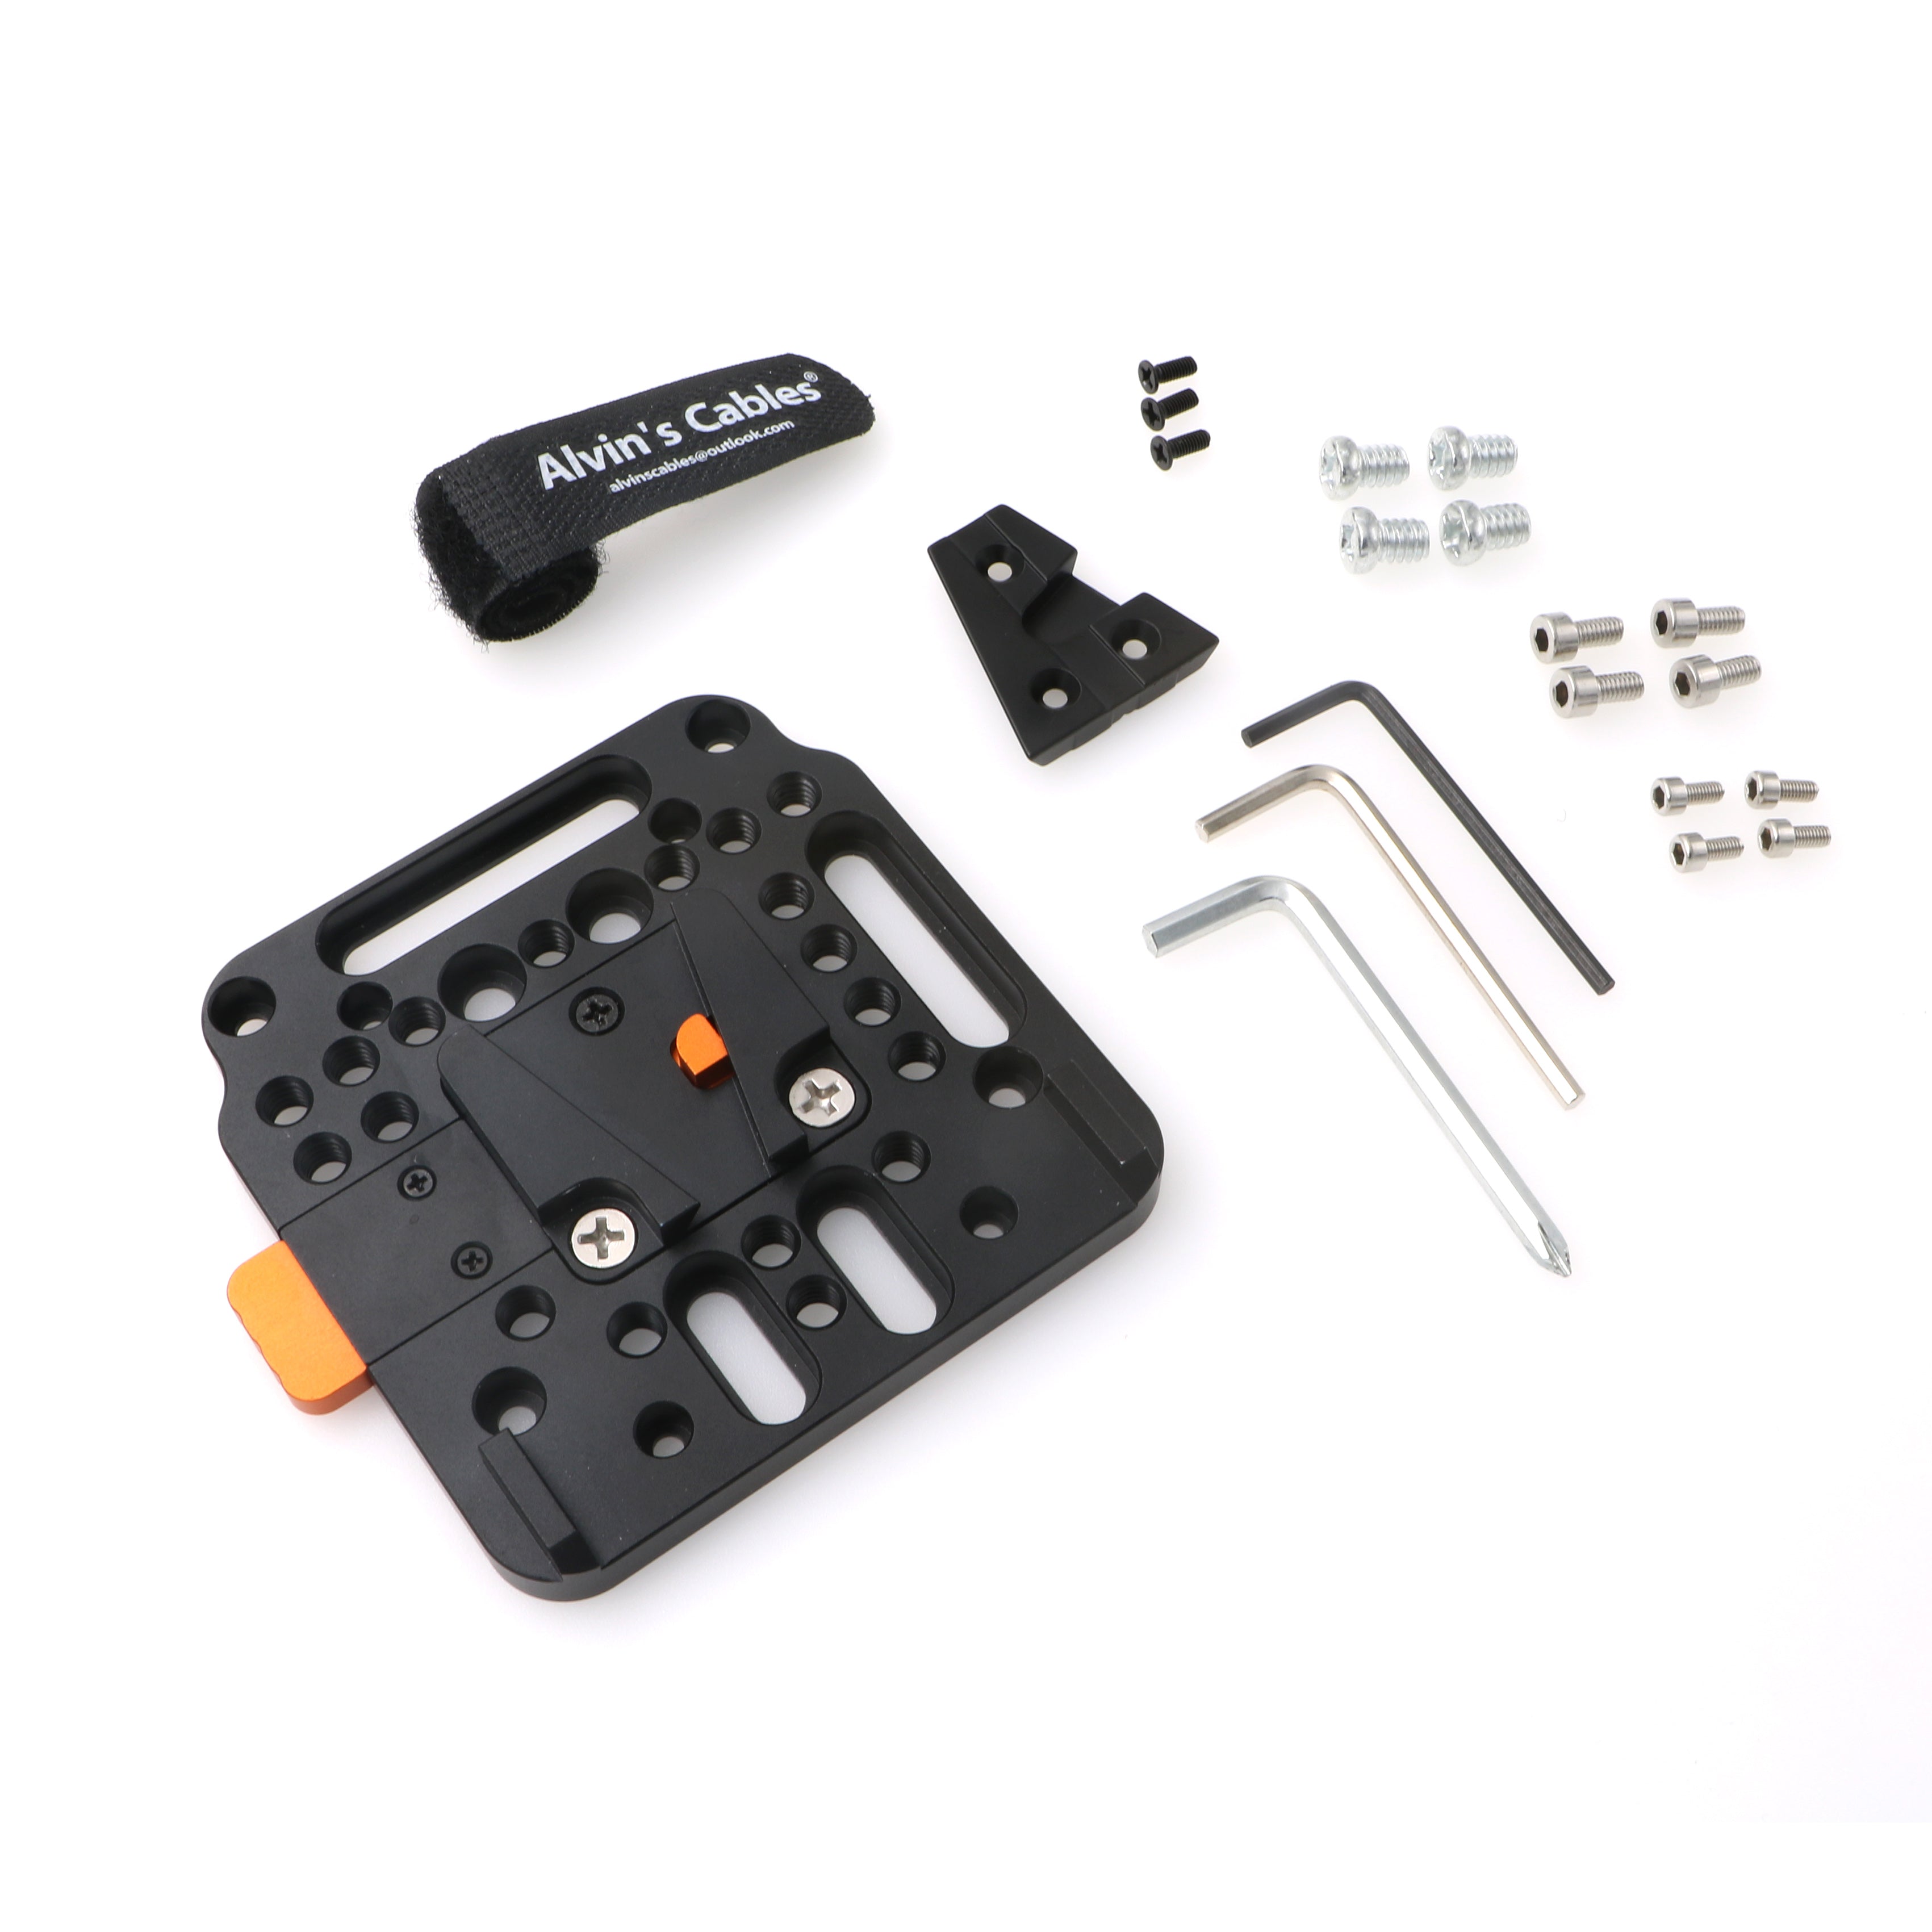 V-Lock Montage-Kit mit Female-V-Dock Male-V-Lock Quick-Release-Plate für V-Mount-Akku Alvin’s Cables